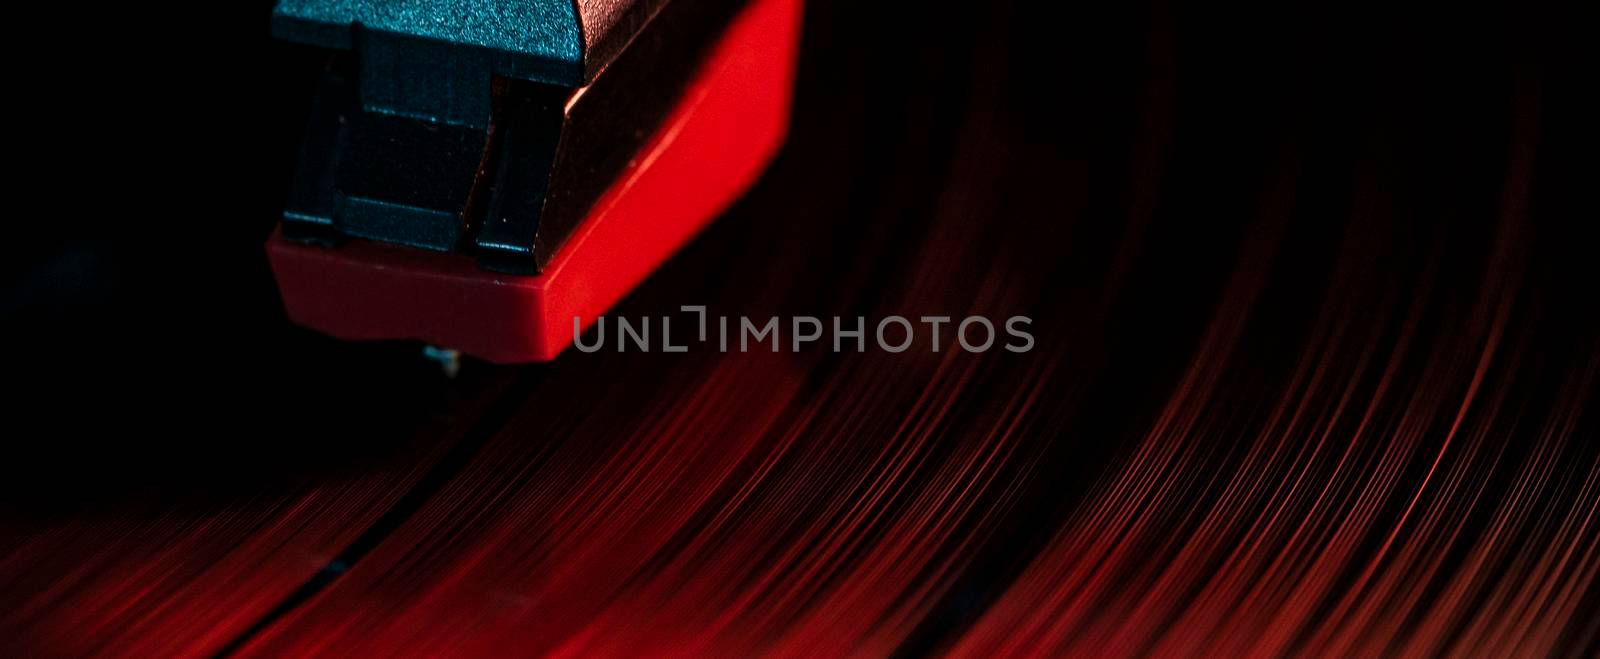 Macro Detail of needle on vinyl record disc